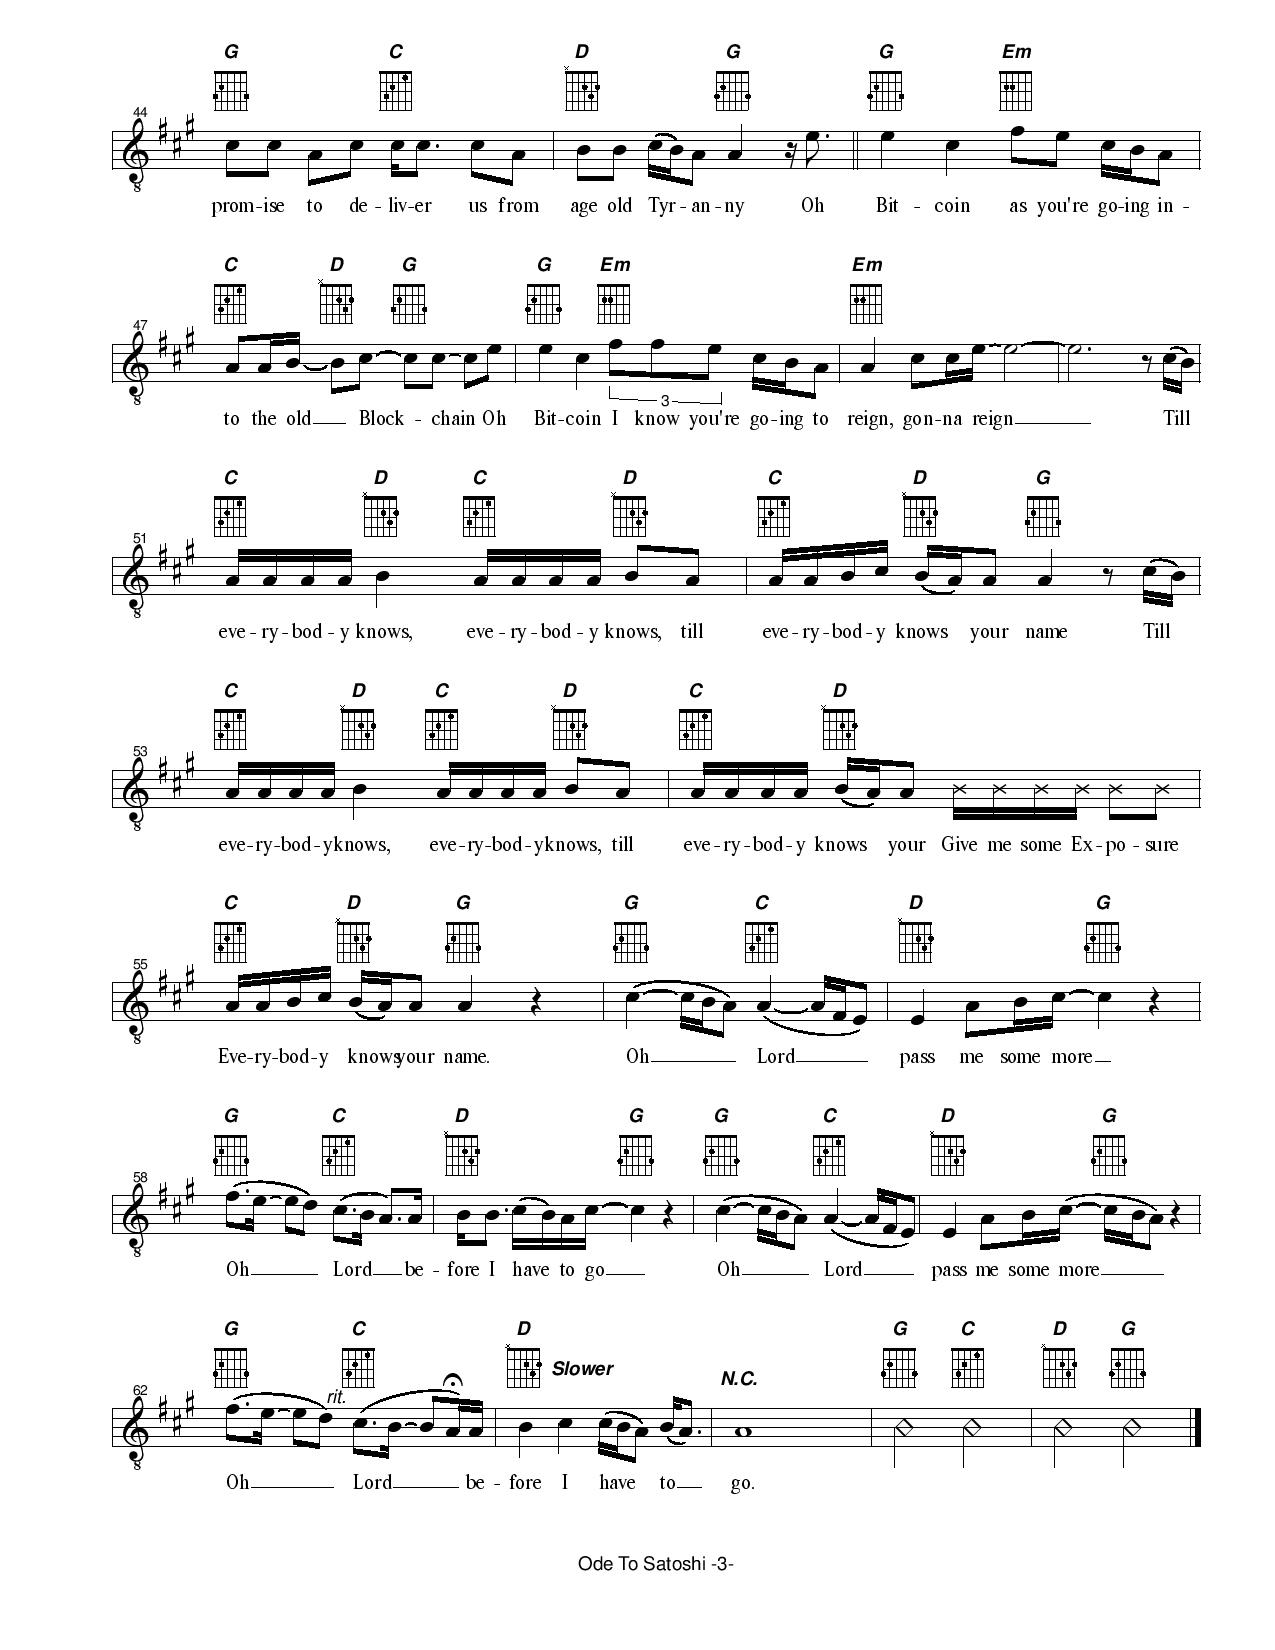 Ode Sheet Music in G-page-003.jpg